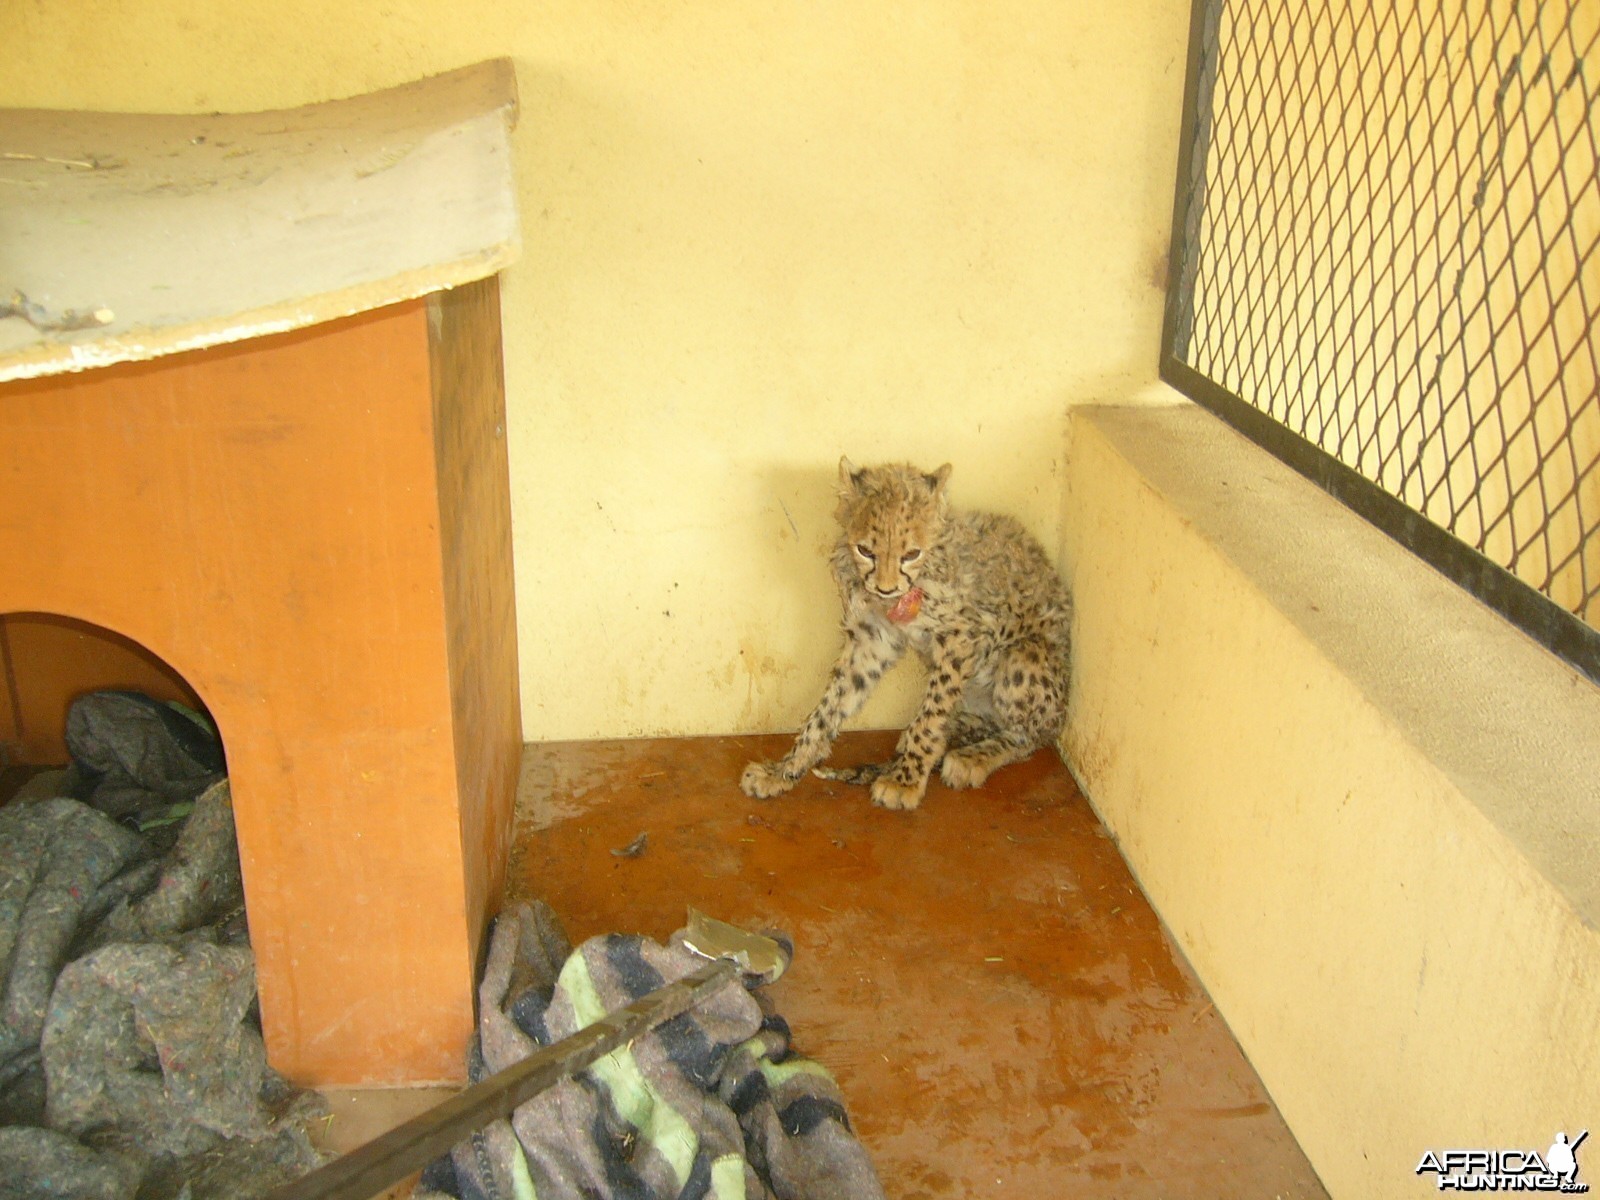 Rescued Baby Cheetah